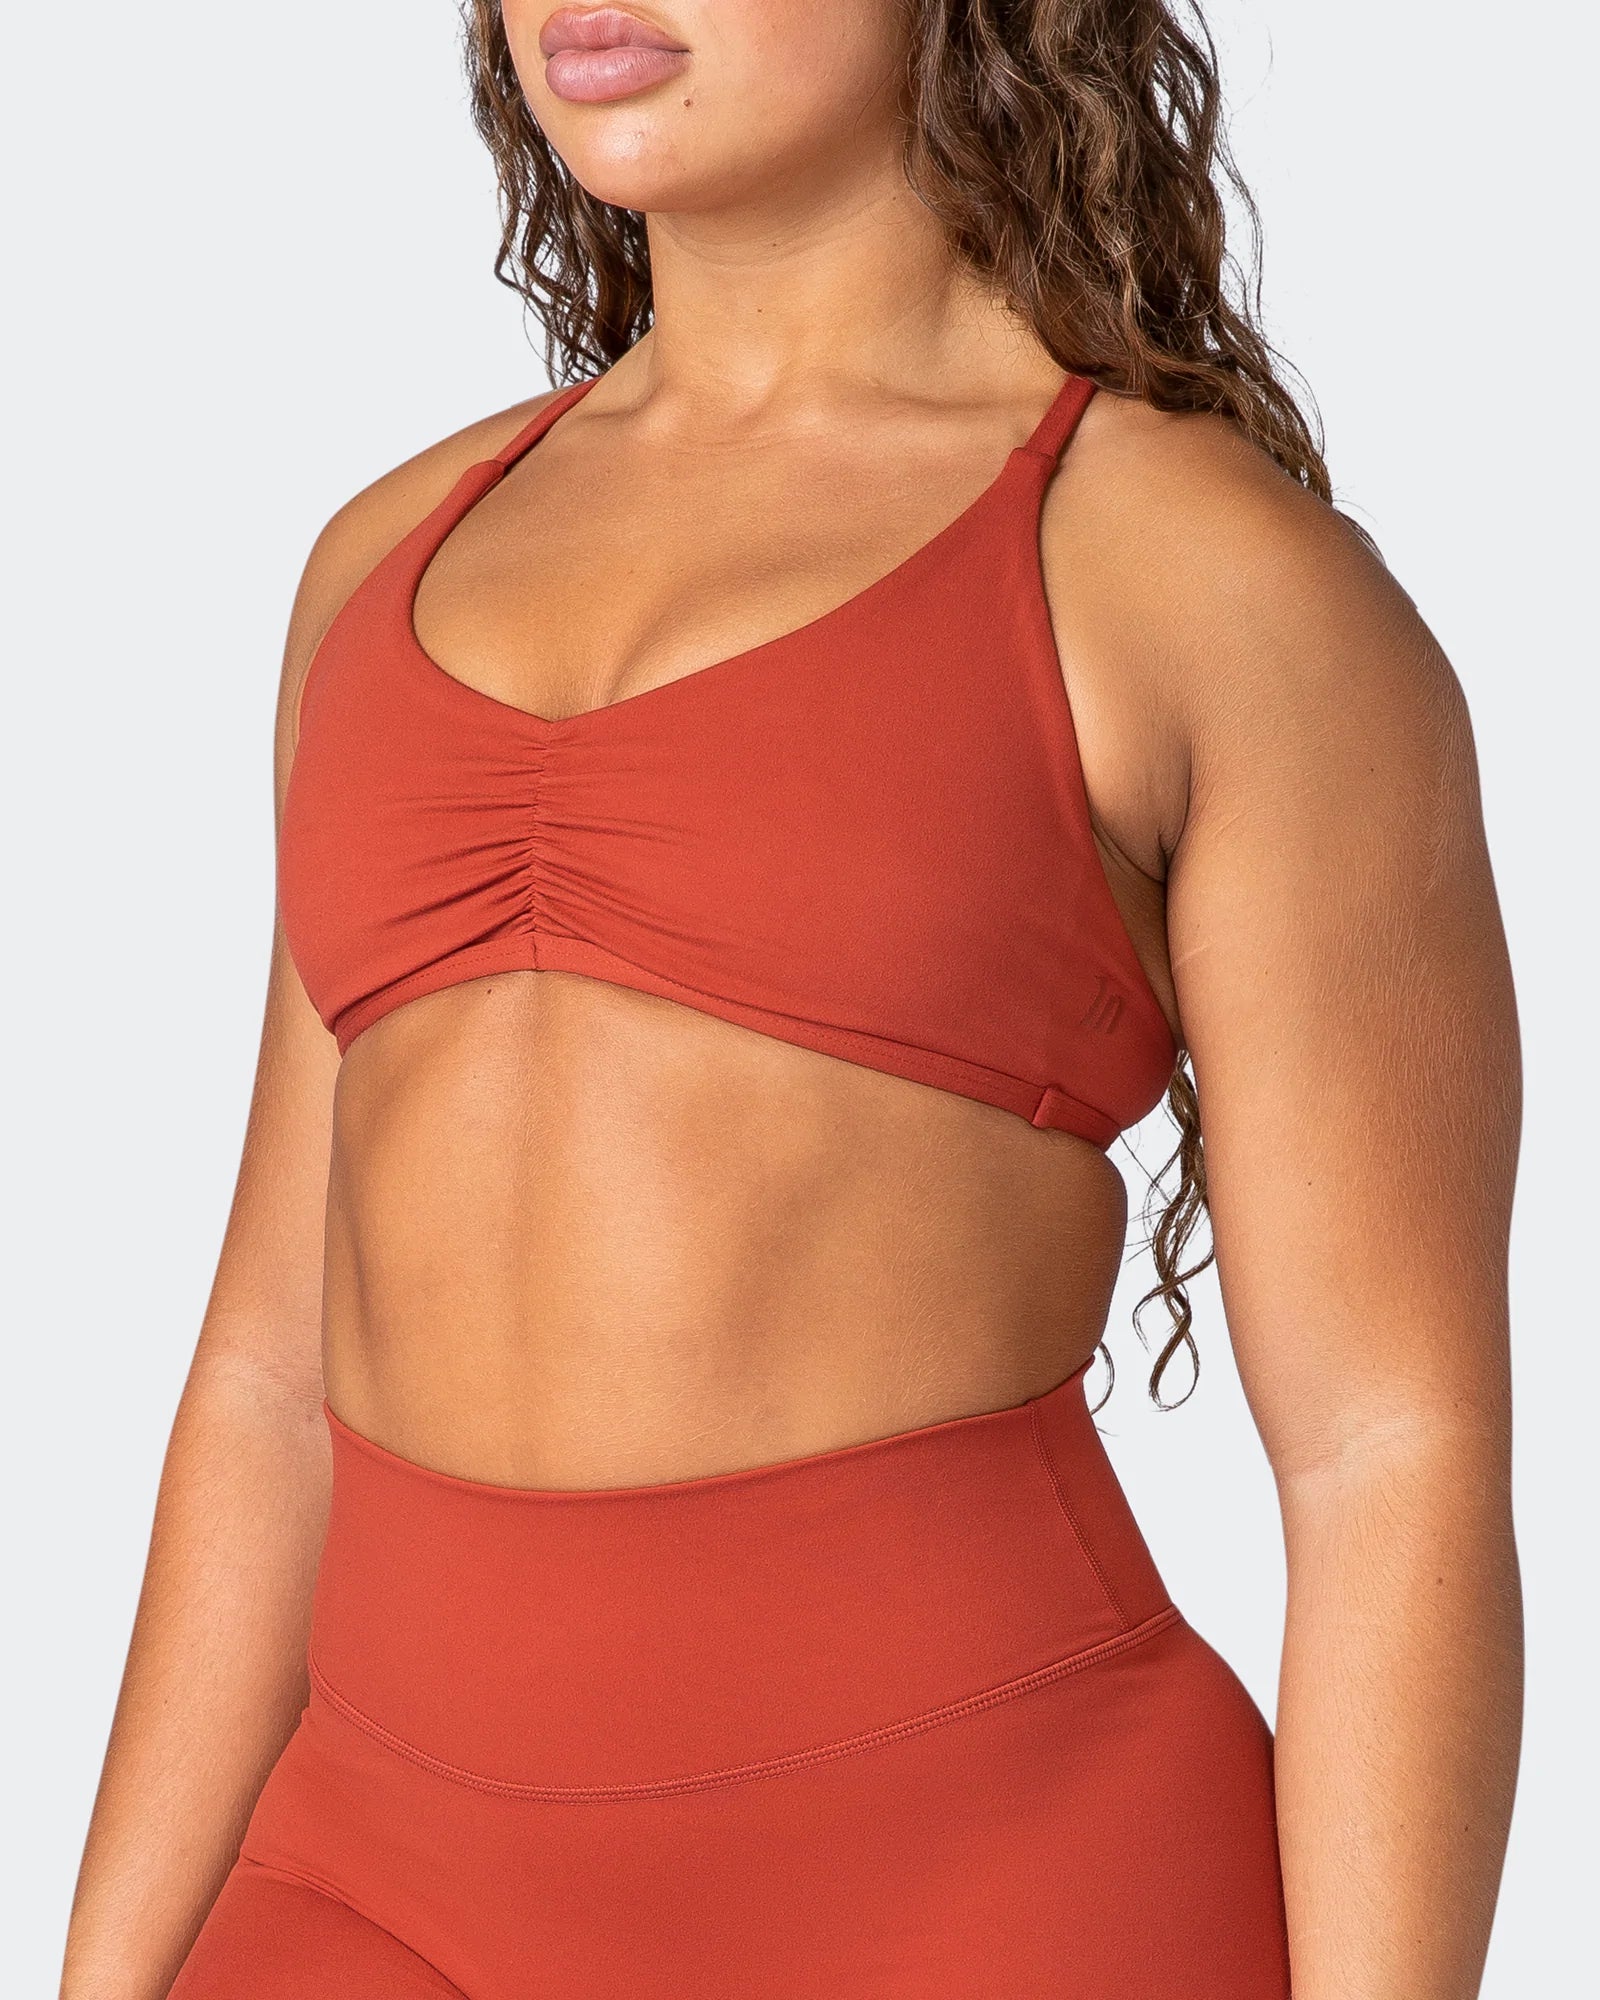 musclenation Sports Bras Millie Bralette - Burnt Orange